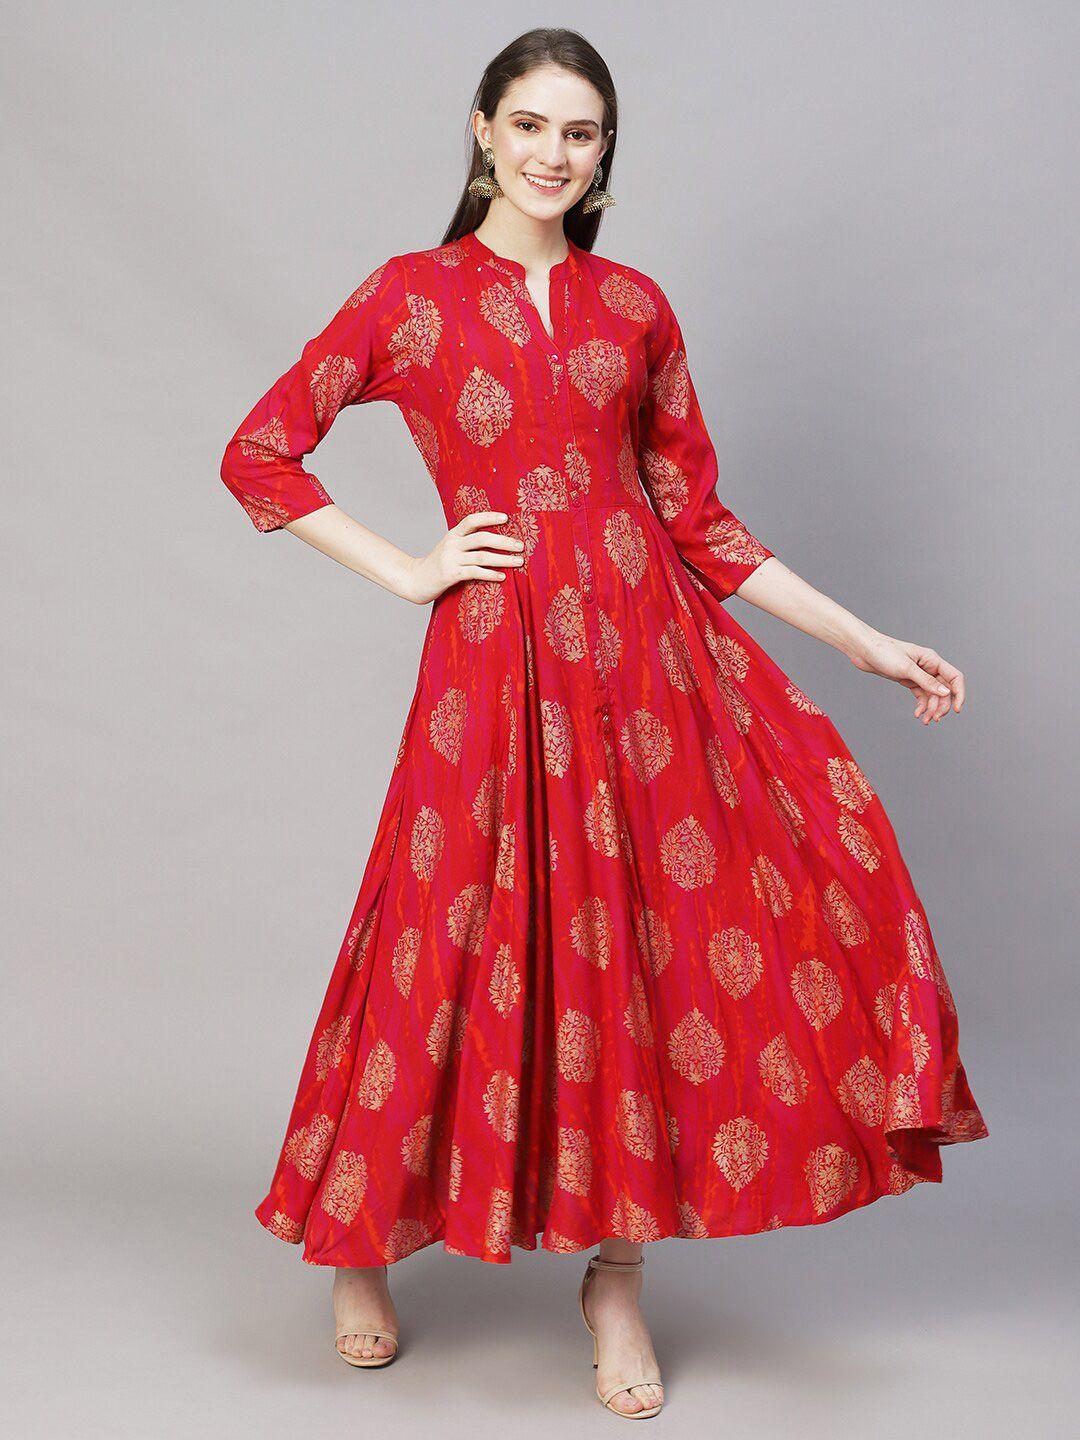 fashor-women-red-ethnic-motifs-ethnic-viscose-rayon-a-line-maxi-dress